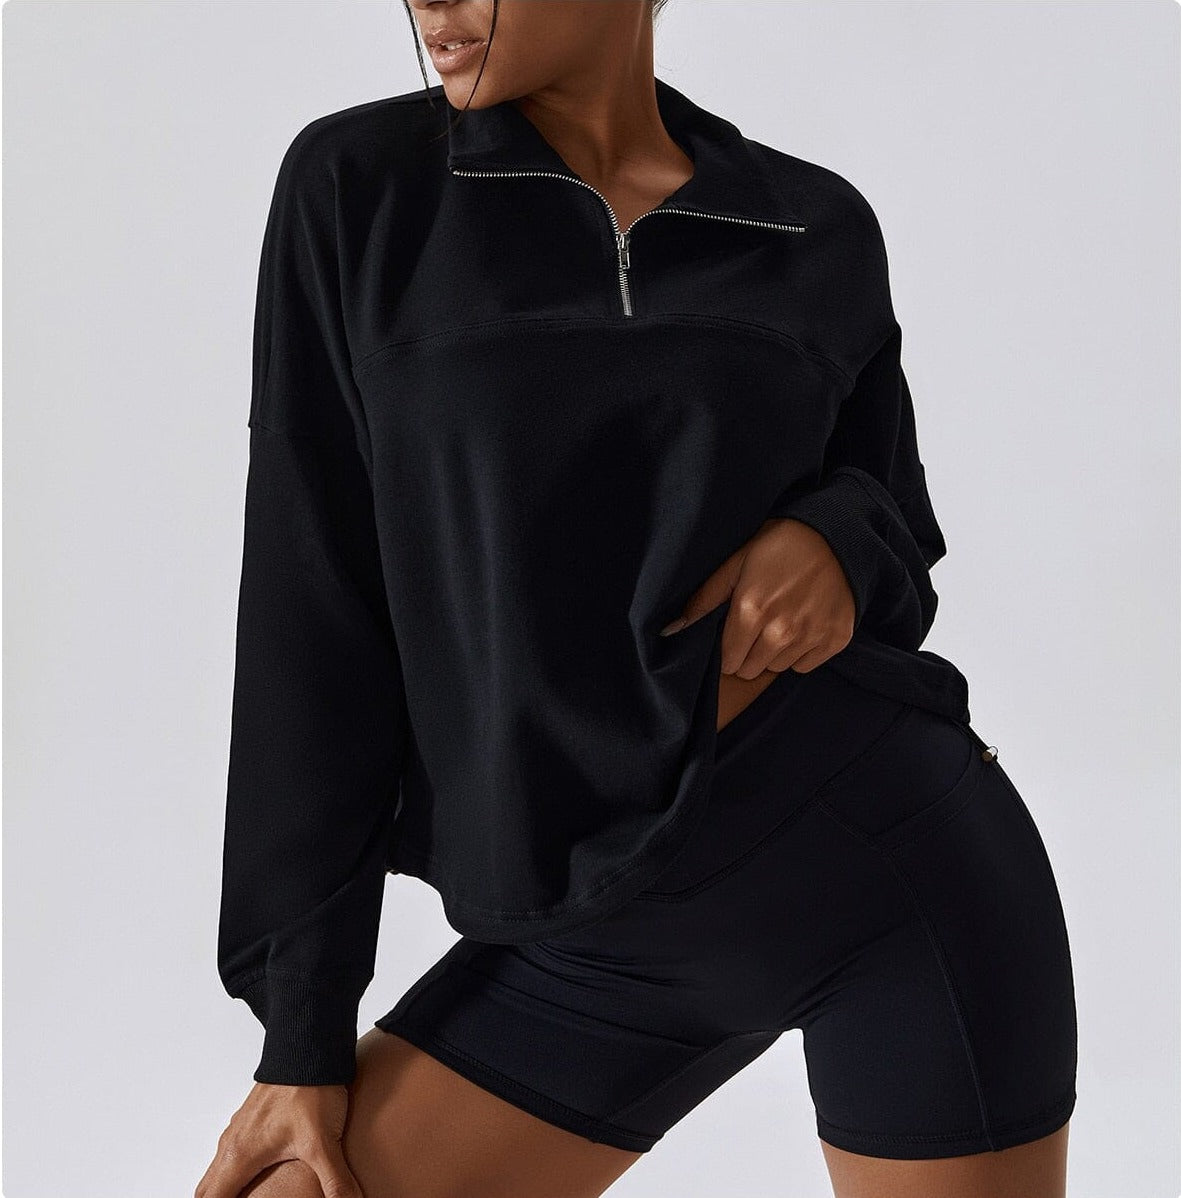 Zipper Loose Long Sleeve Sweater Home Truetights Advanced Black S 